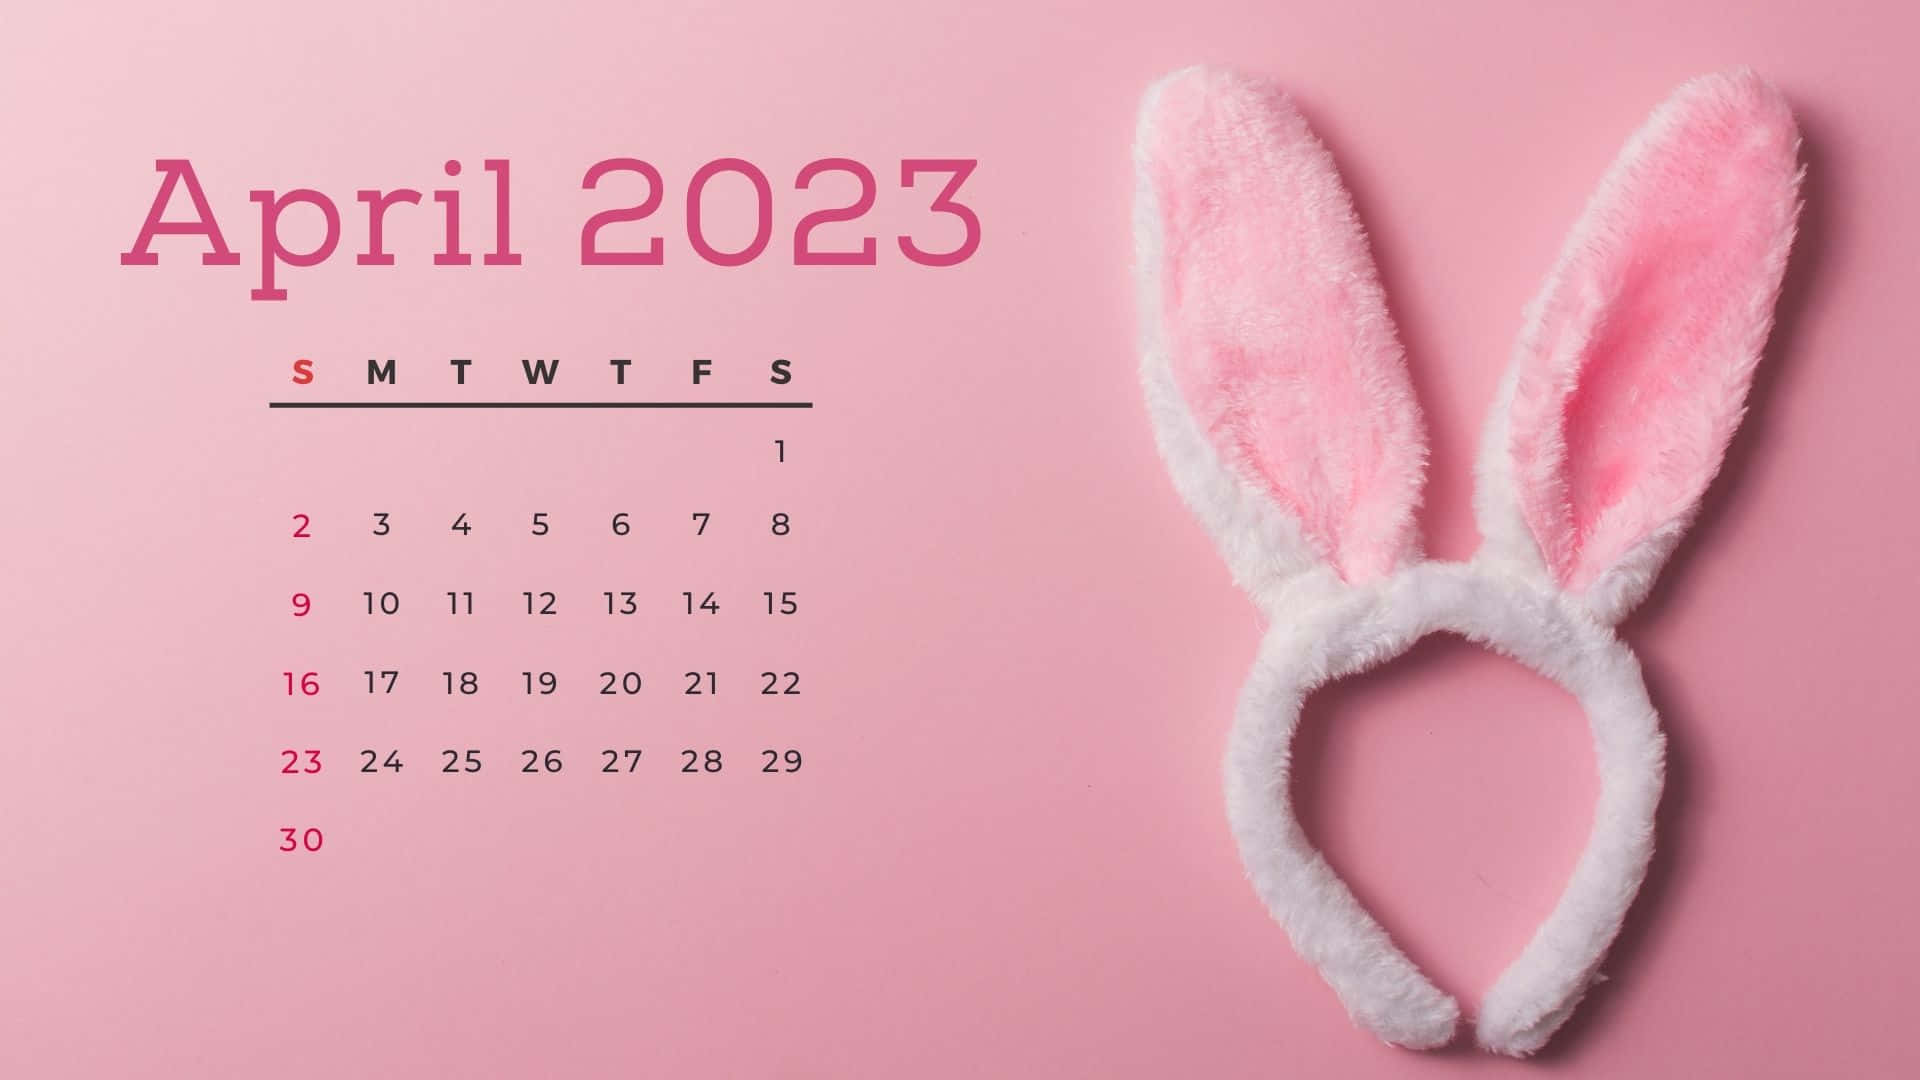 Free April 2023 Calendar Wallpaper Downloads, April 2023 Calendar Wallpaper for FREE